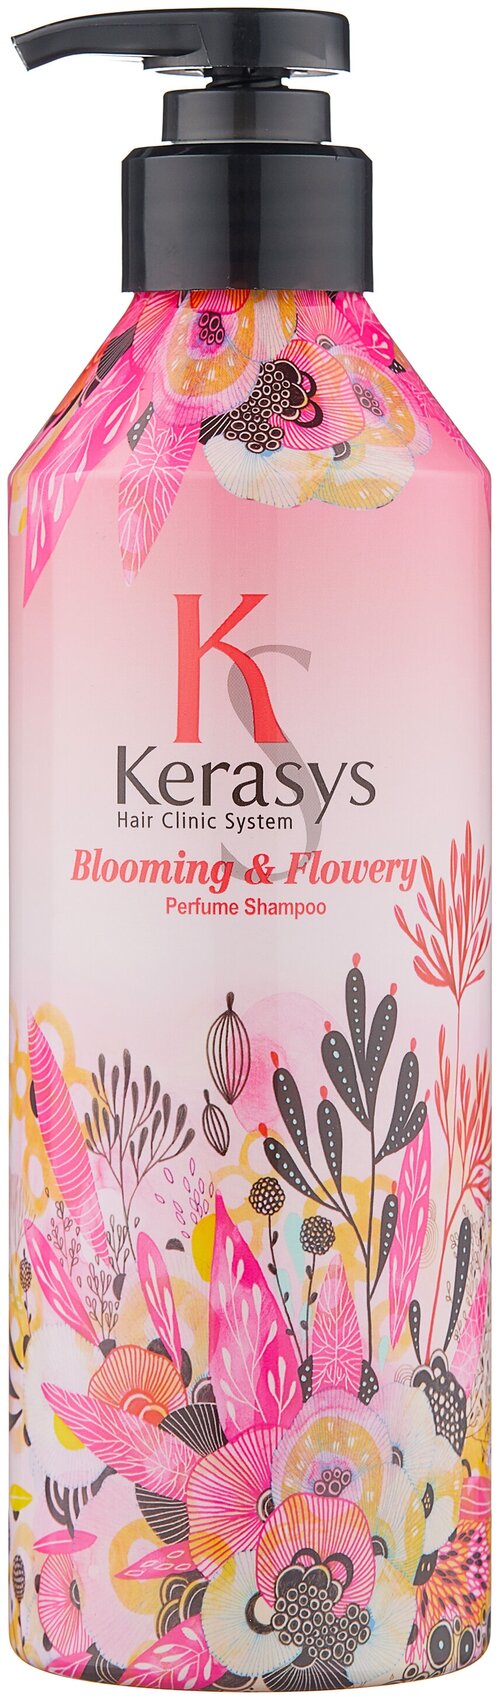 KeraSys шампунь Blooming & Flowery, 600 мл